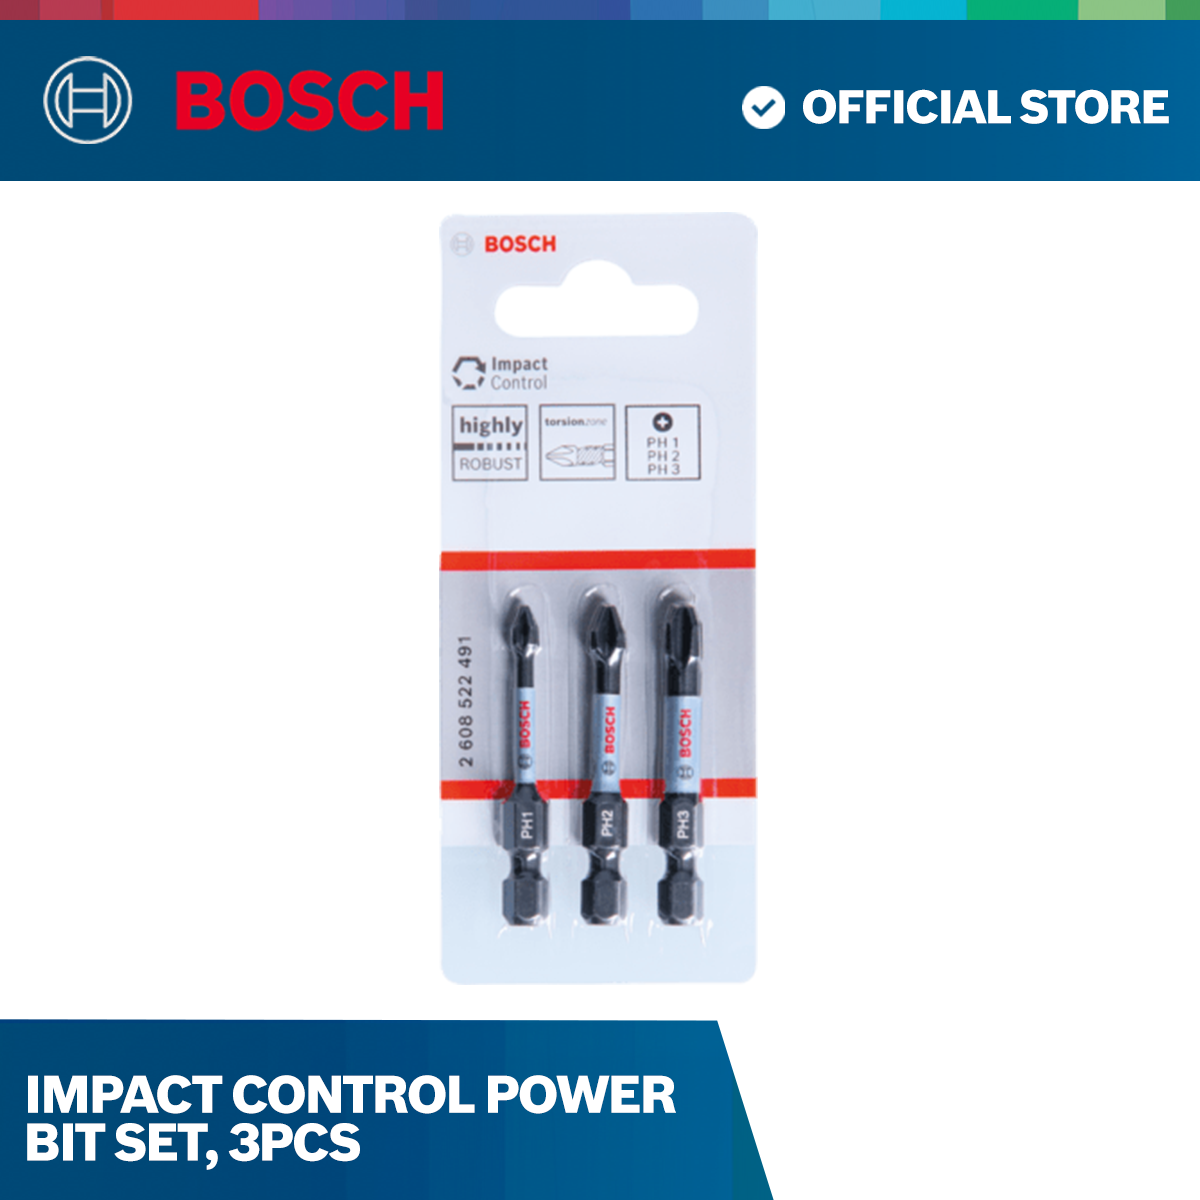 Impact Control Power Bit Set, 3pcs